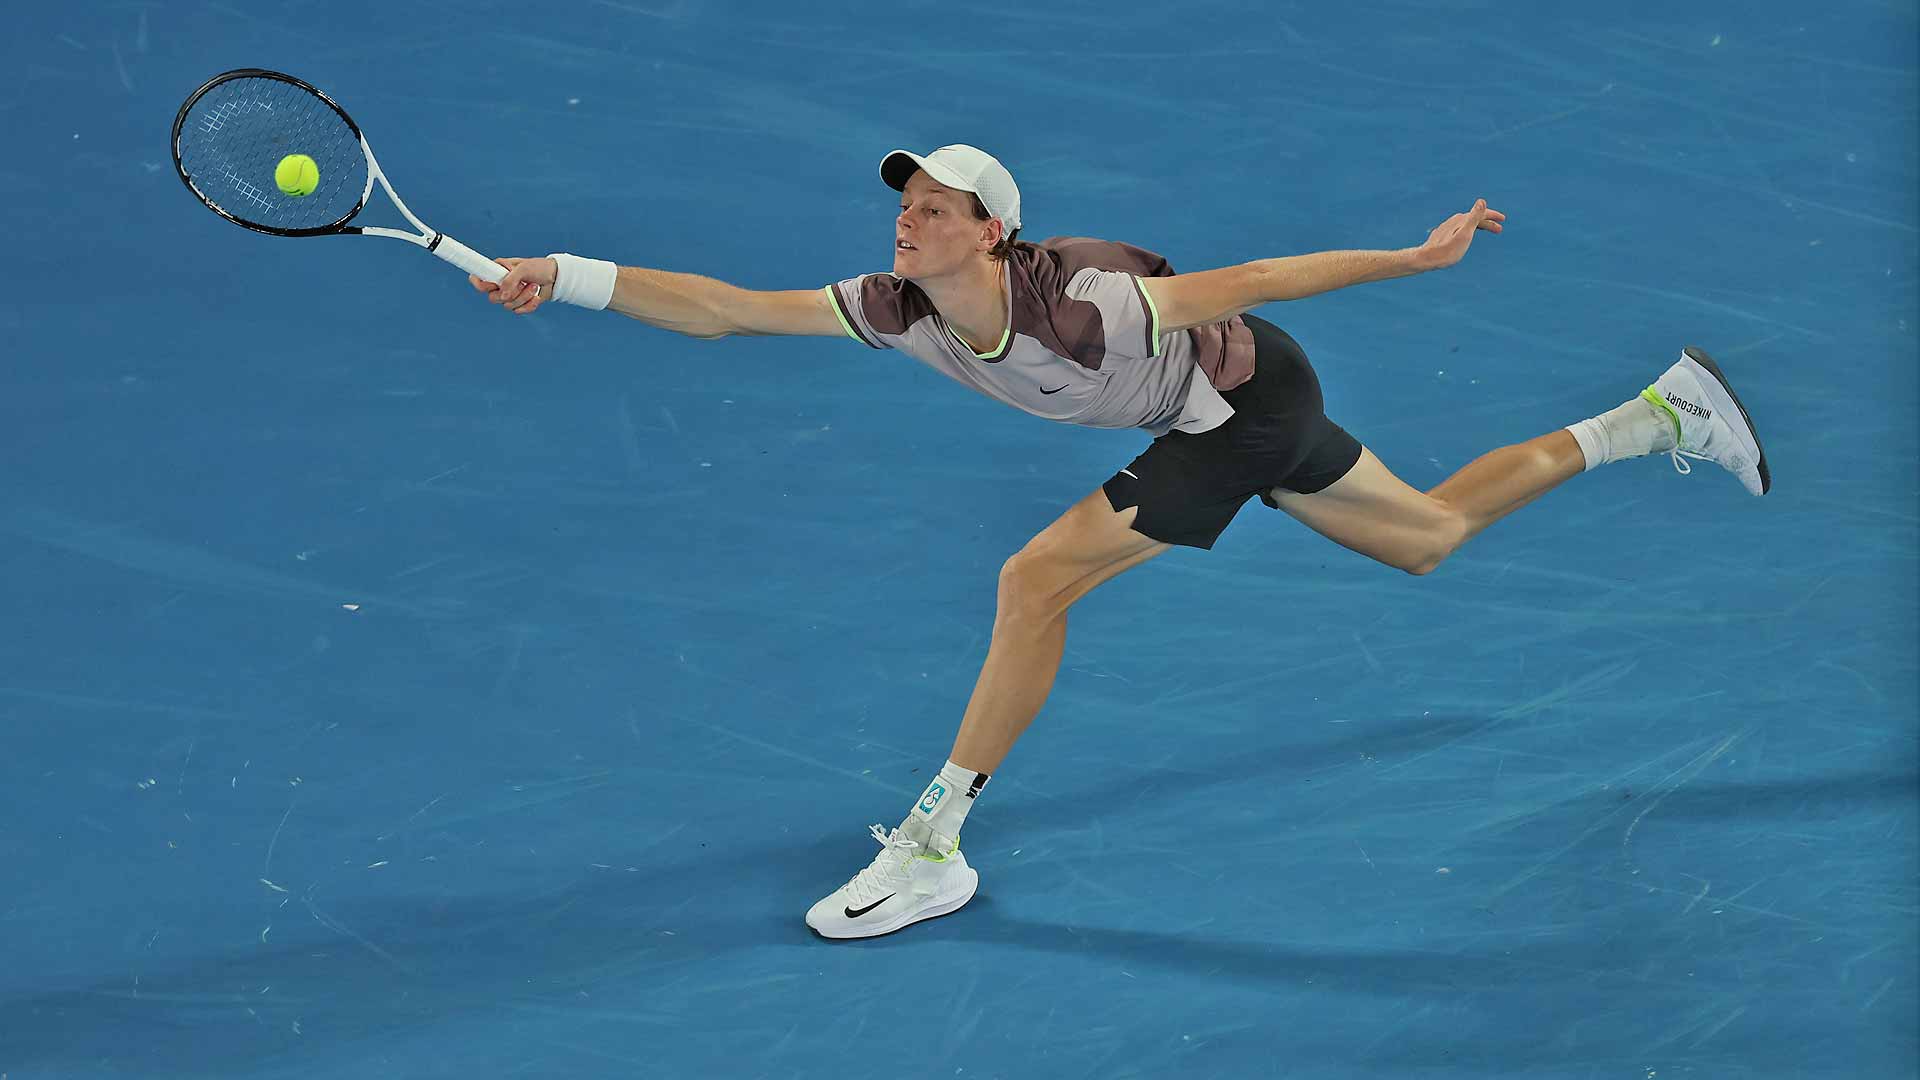 Jannik Sinner rallies past Daniil Medvedev in the Australian Open final.